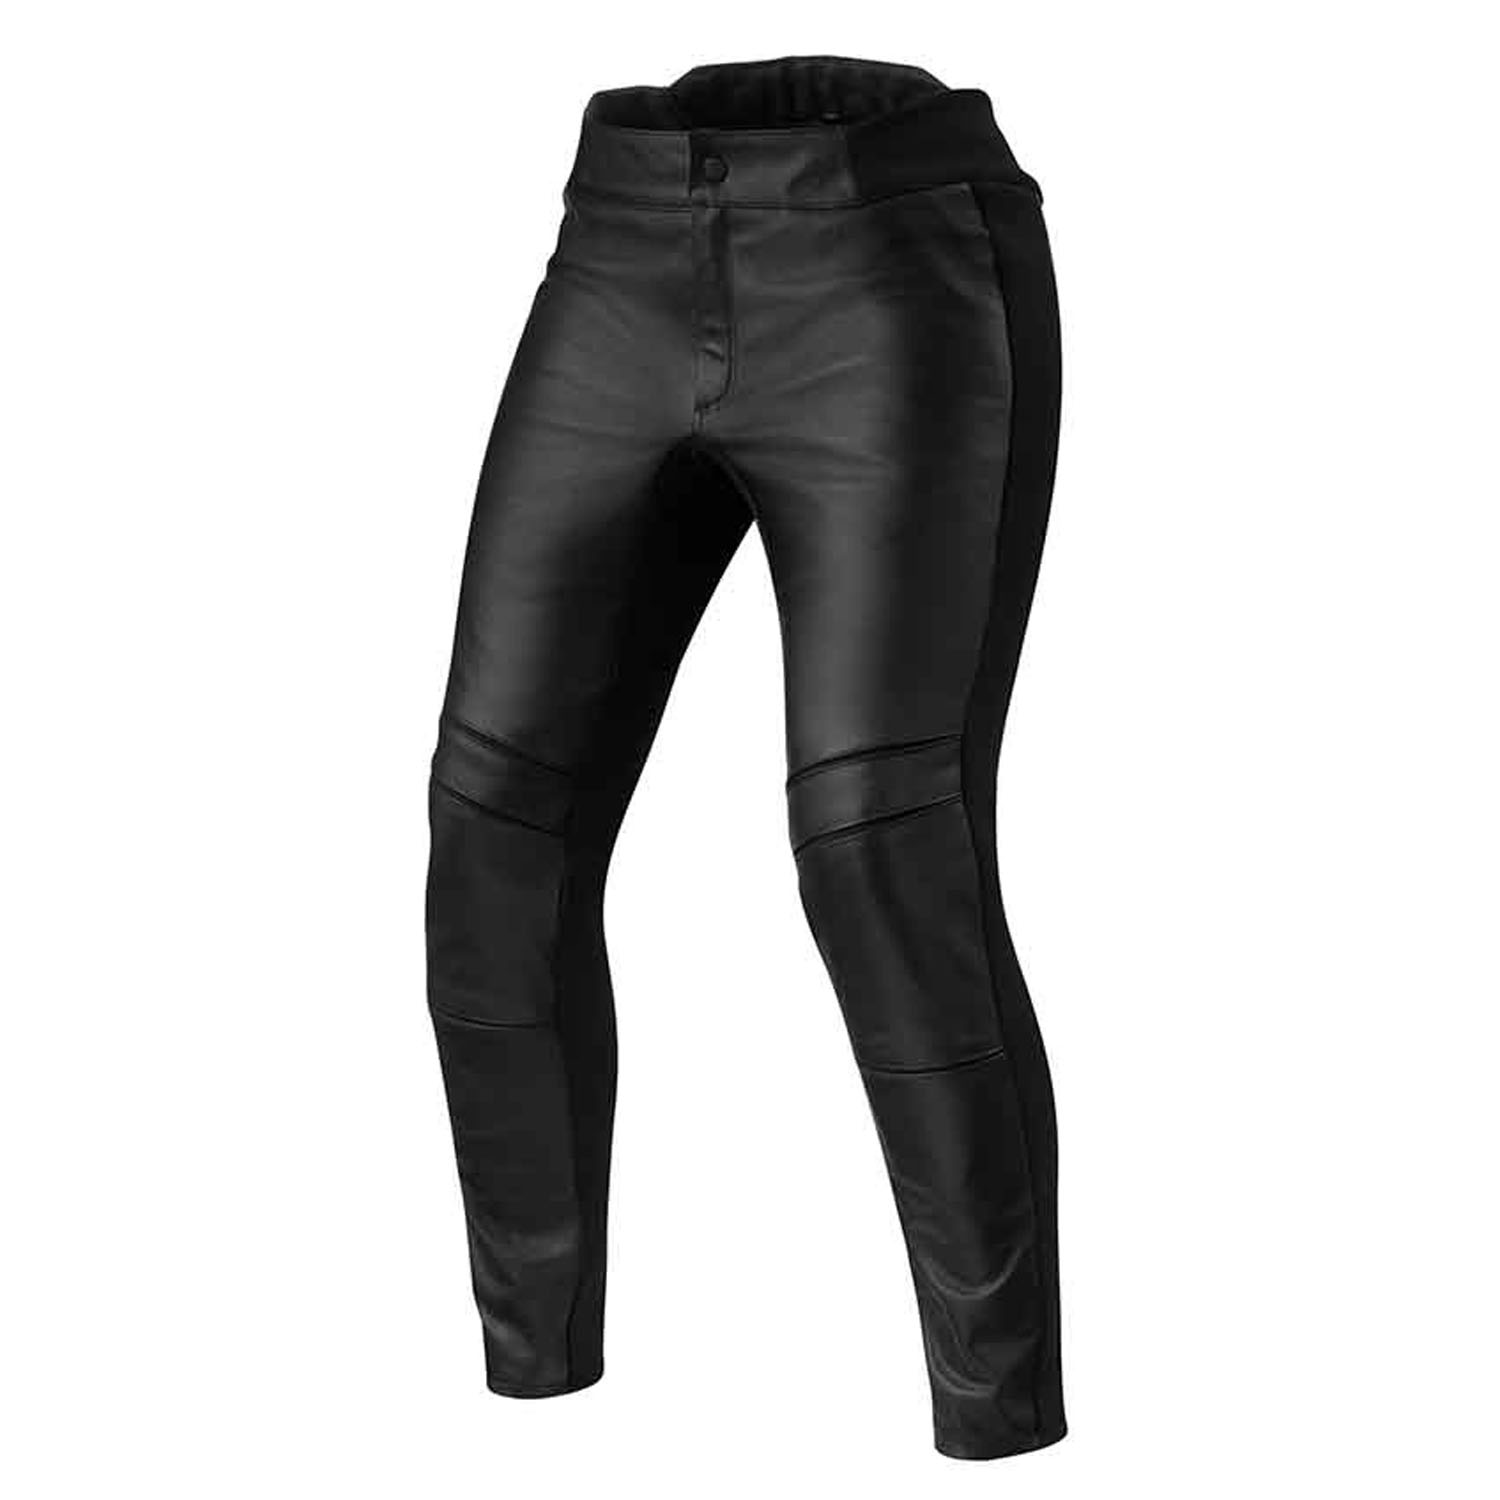 Image of REV'IT! Maci Ladies Black Short Motorcycle Pants Taille 42